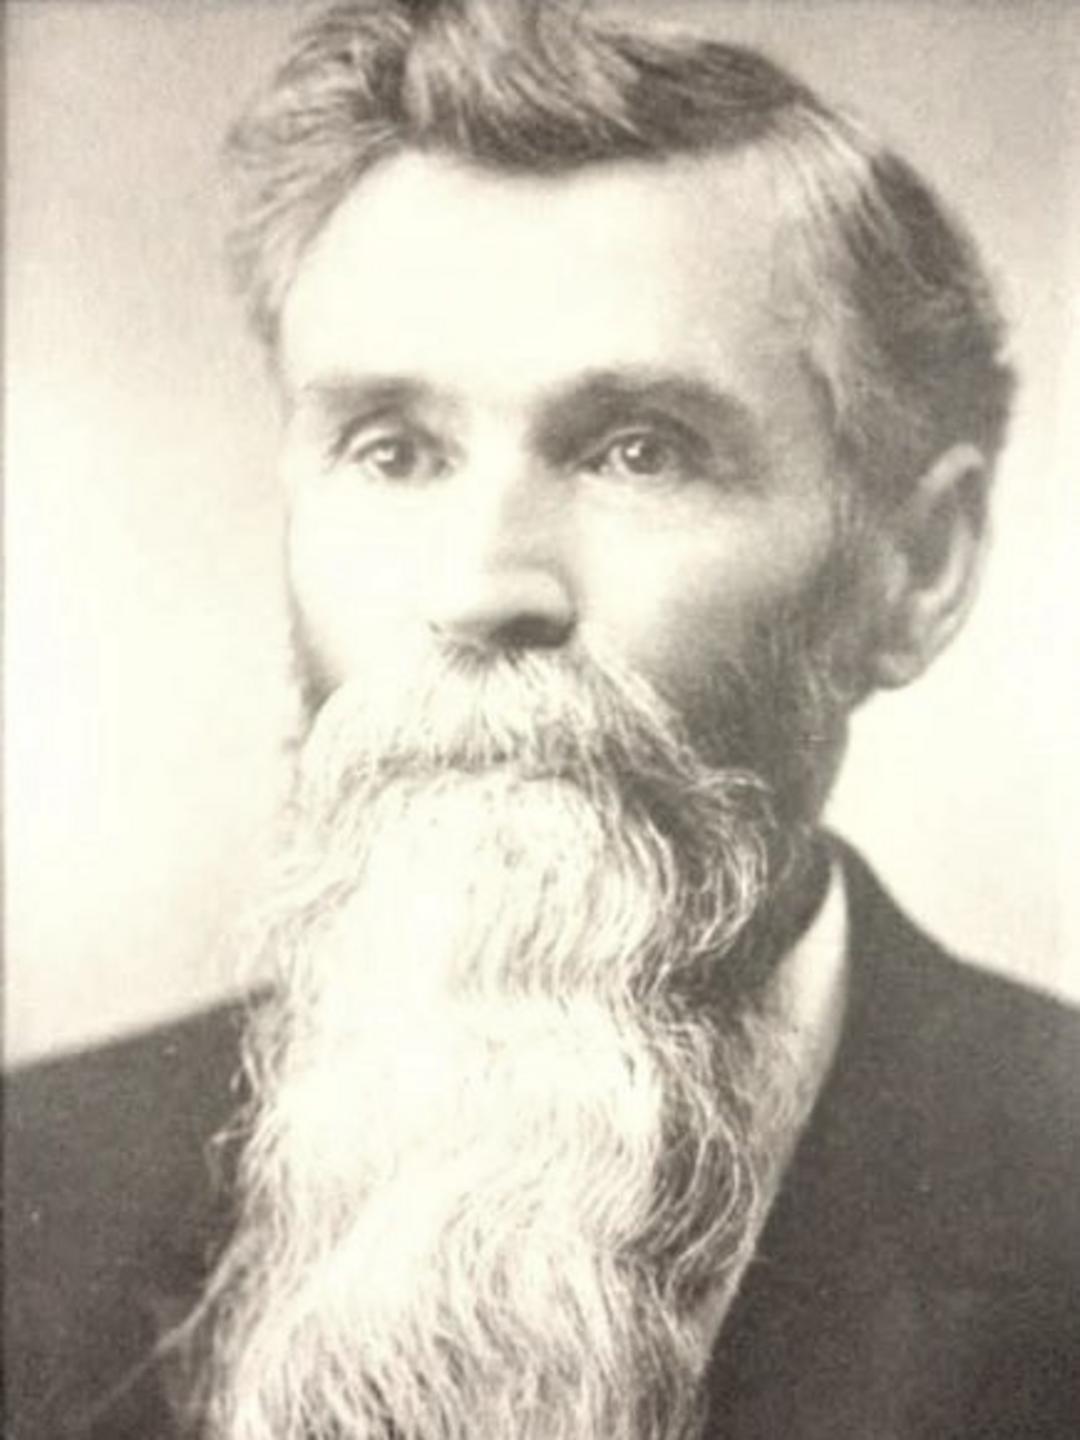 Joseph Loftus Jolley (1846 - 1916)